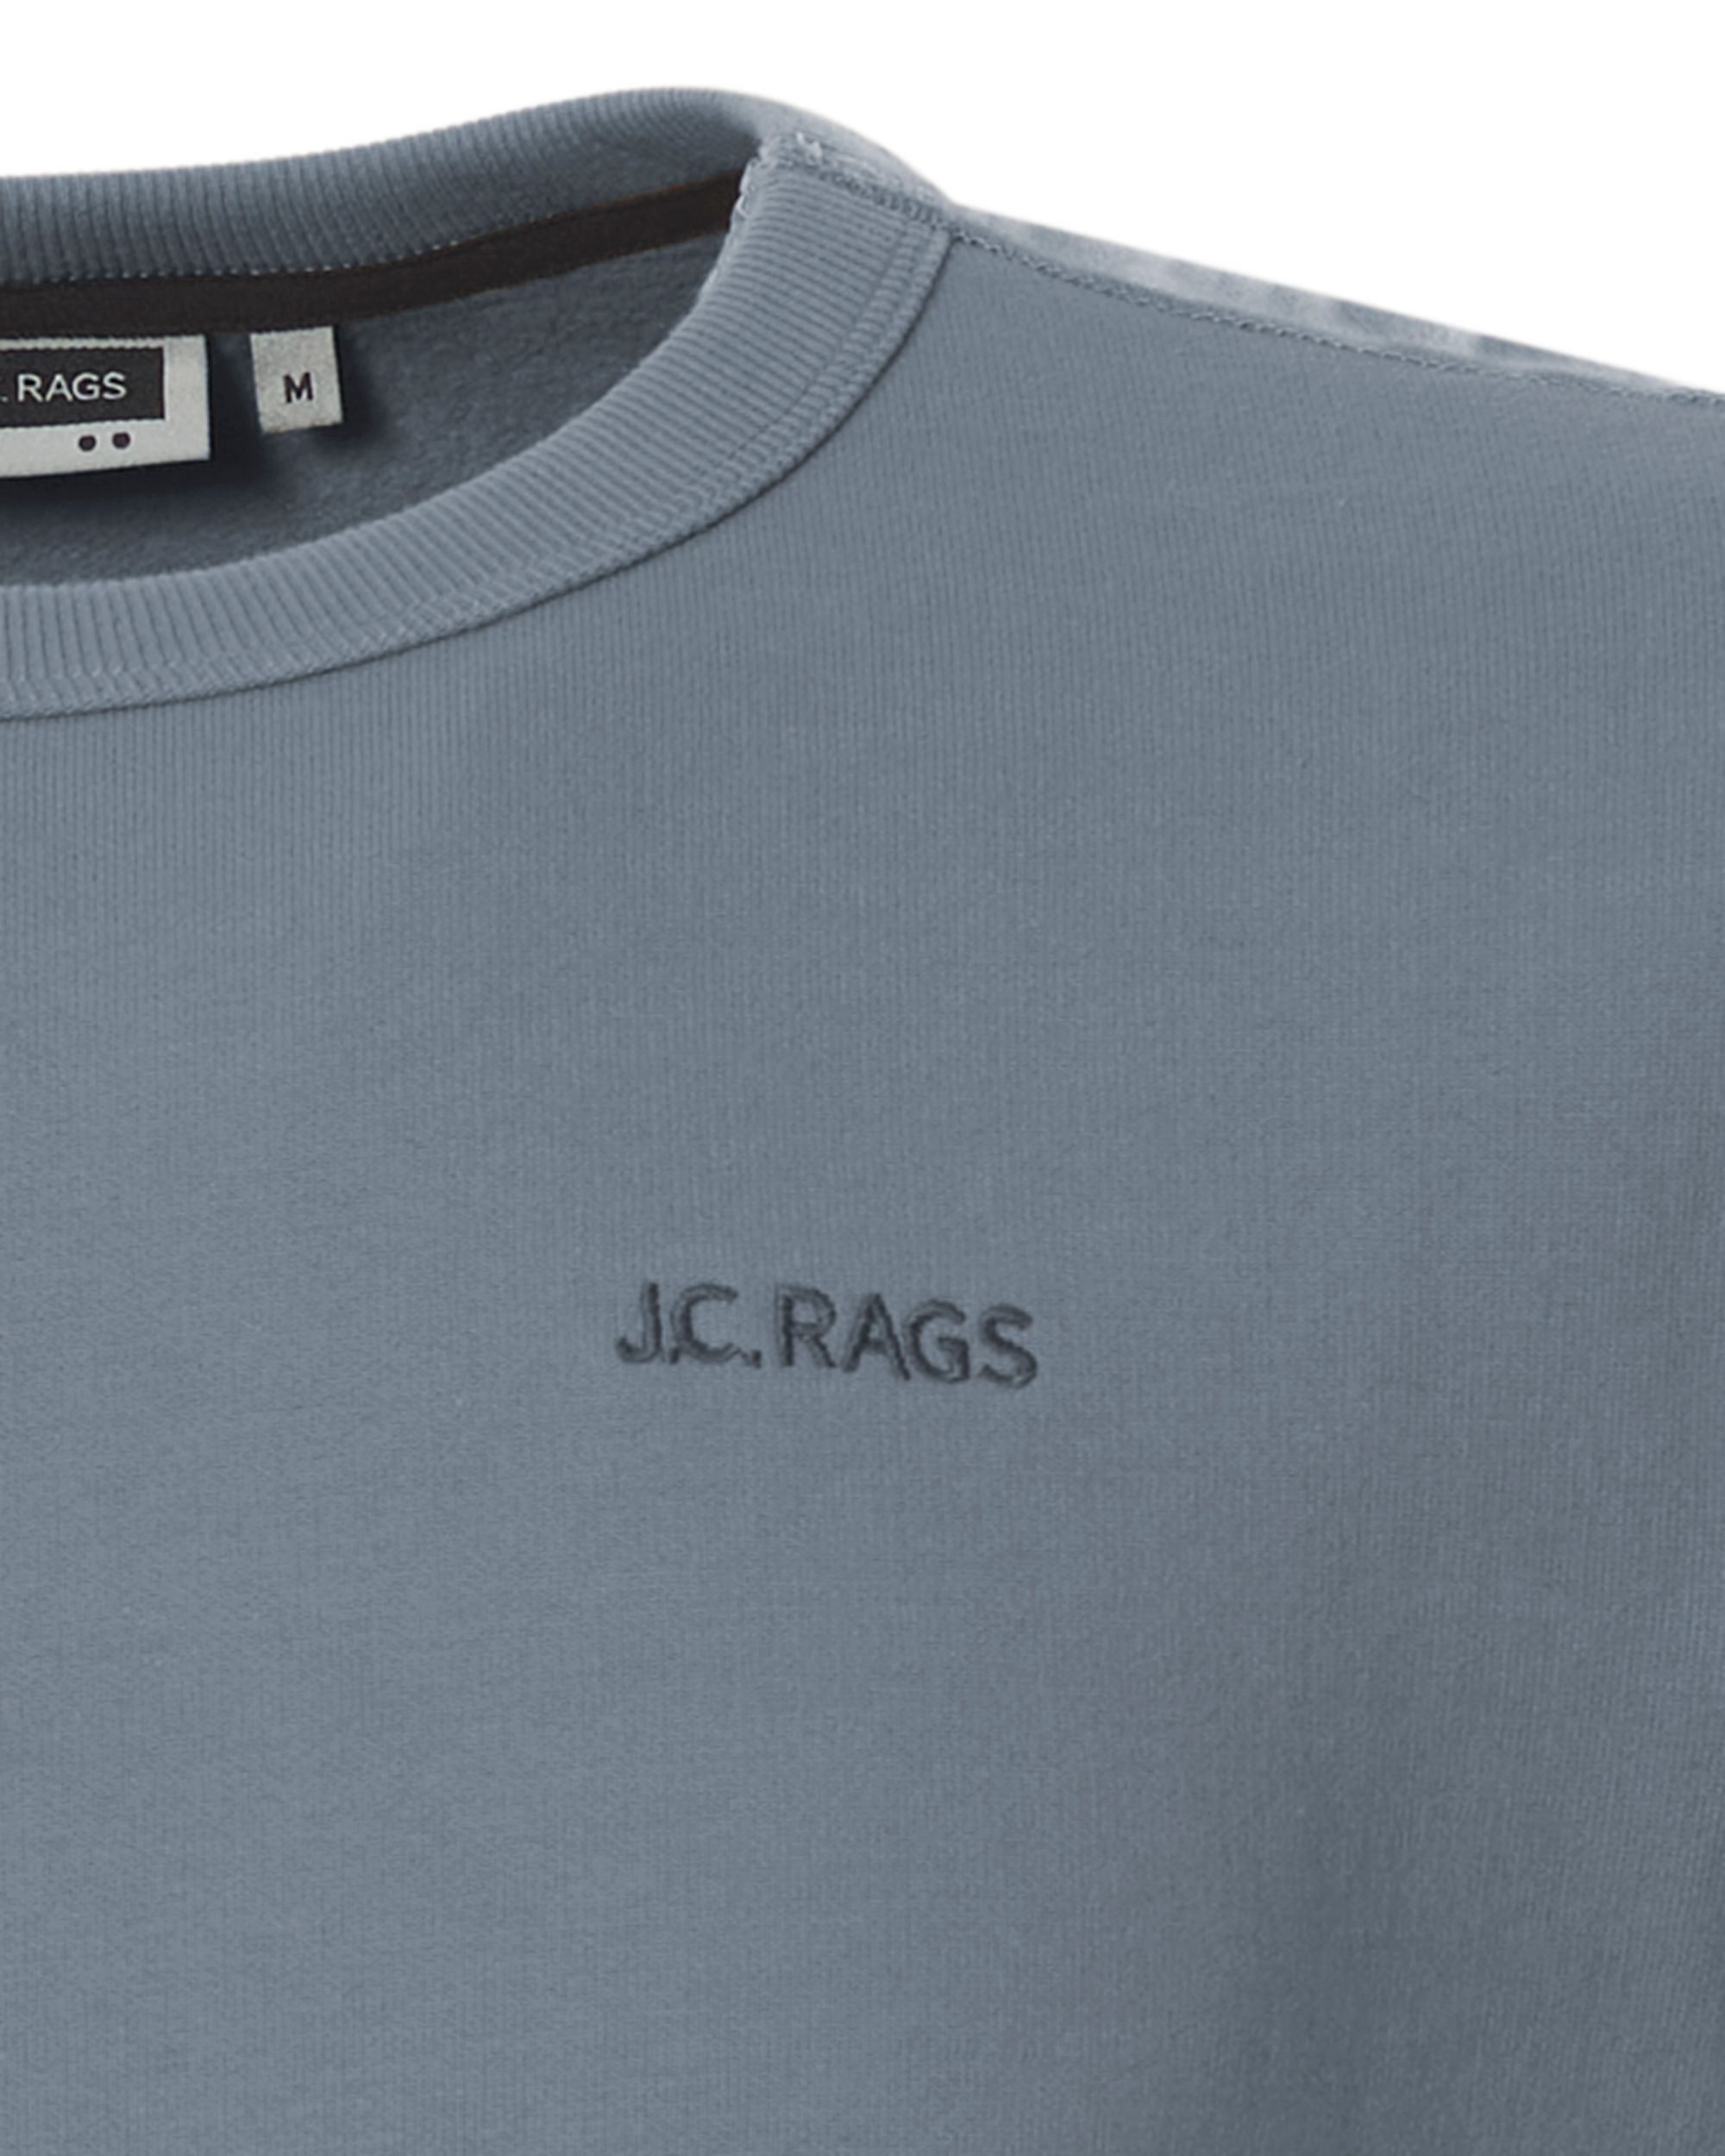 J.C. RAGS Jordan Sweater Middenblauw uni 073069-001-L